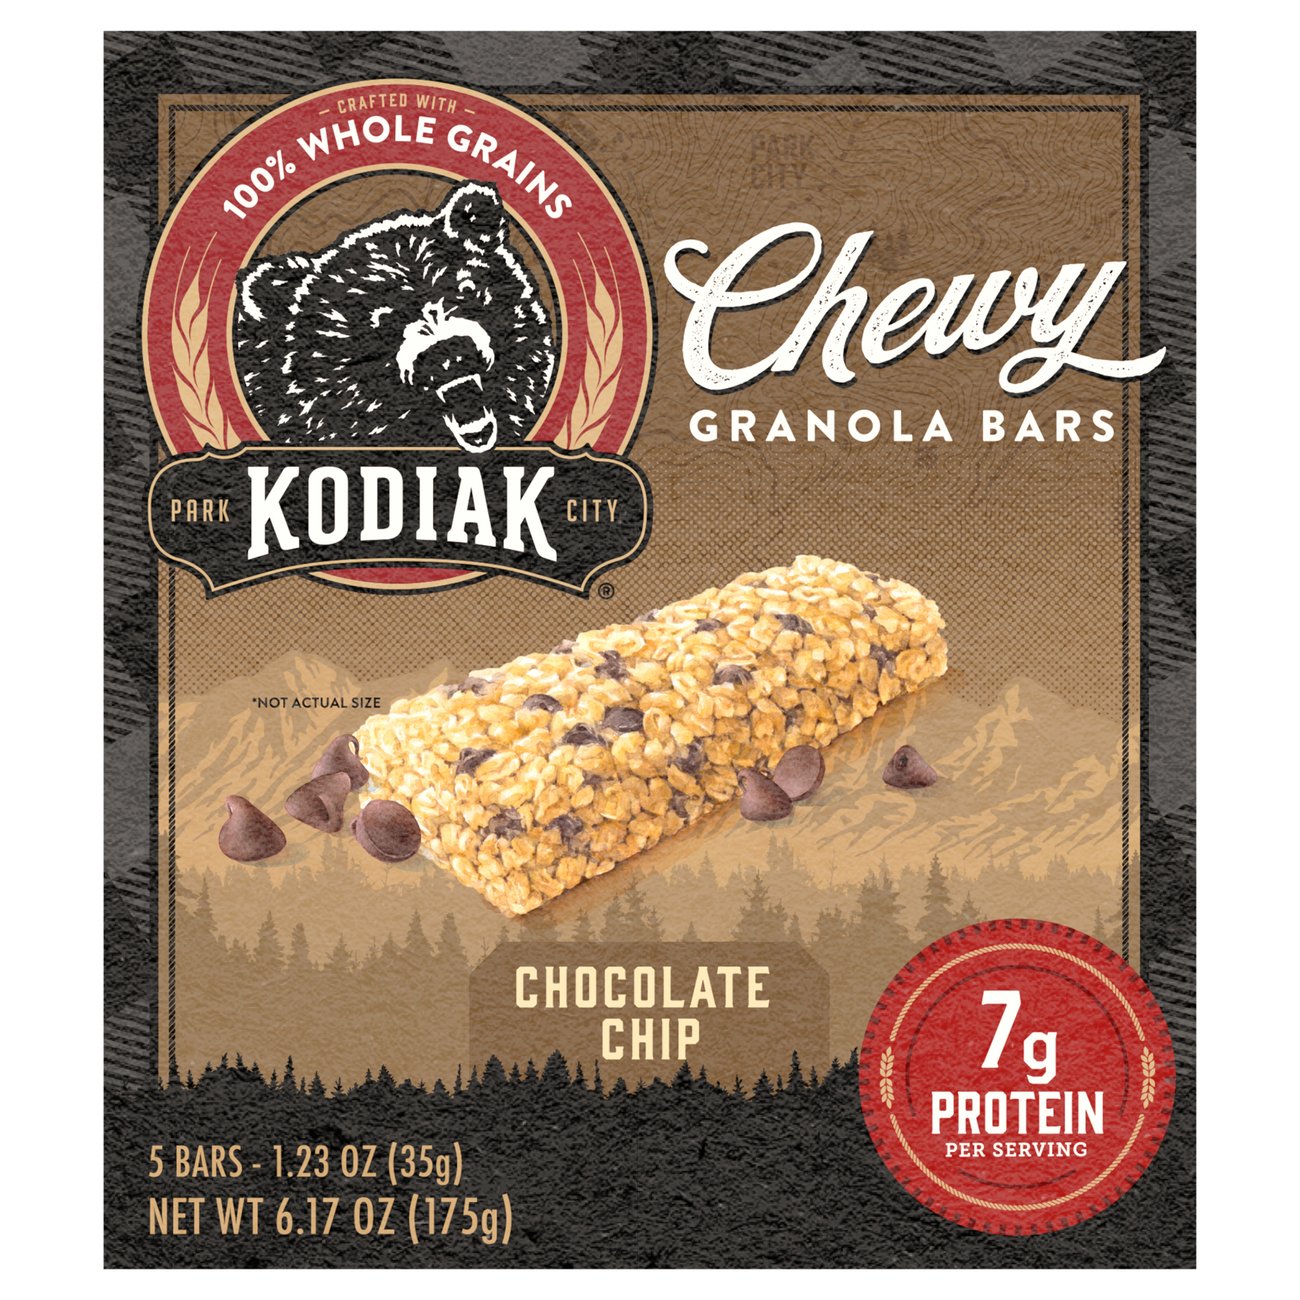 Kodiak Cakes 7g Protein Chewy Granola Bars - Chocolate Chip - Shop Granola  & Snack Bars at H-E-B